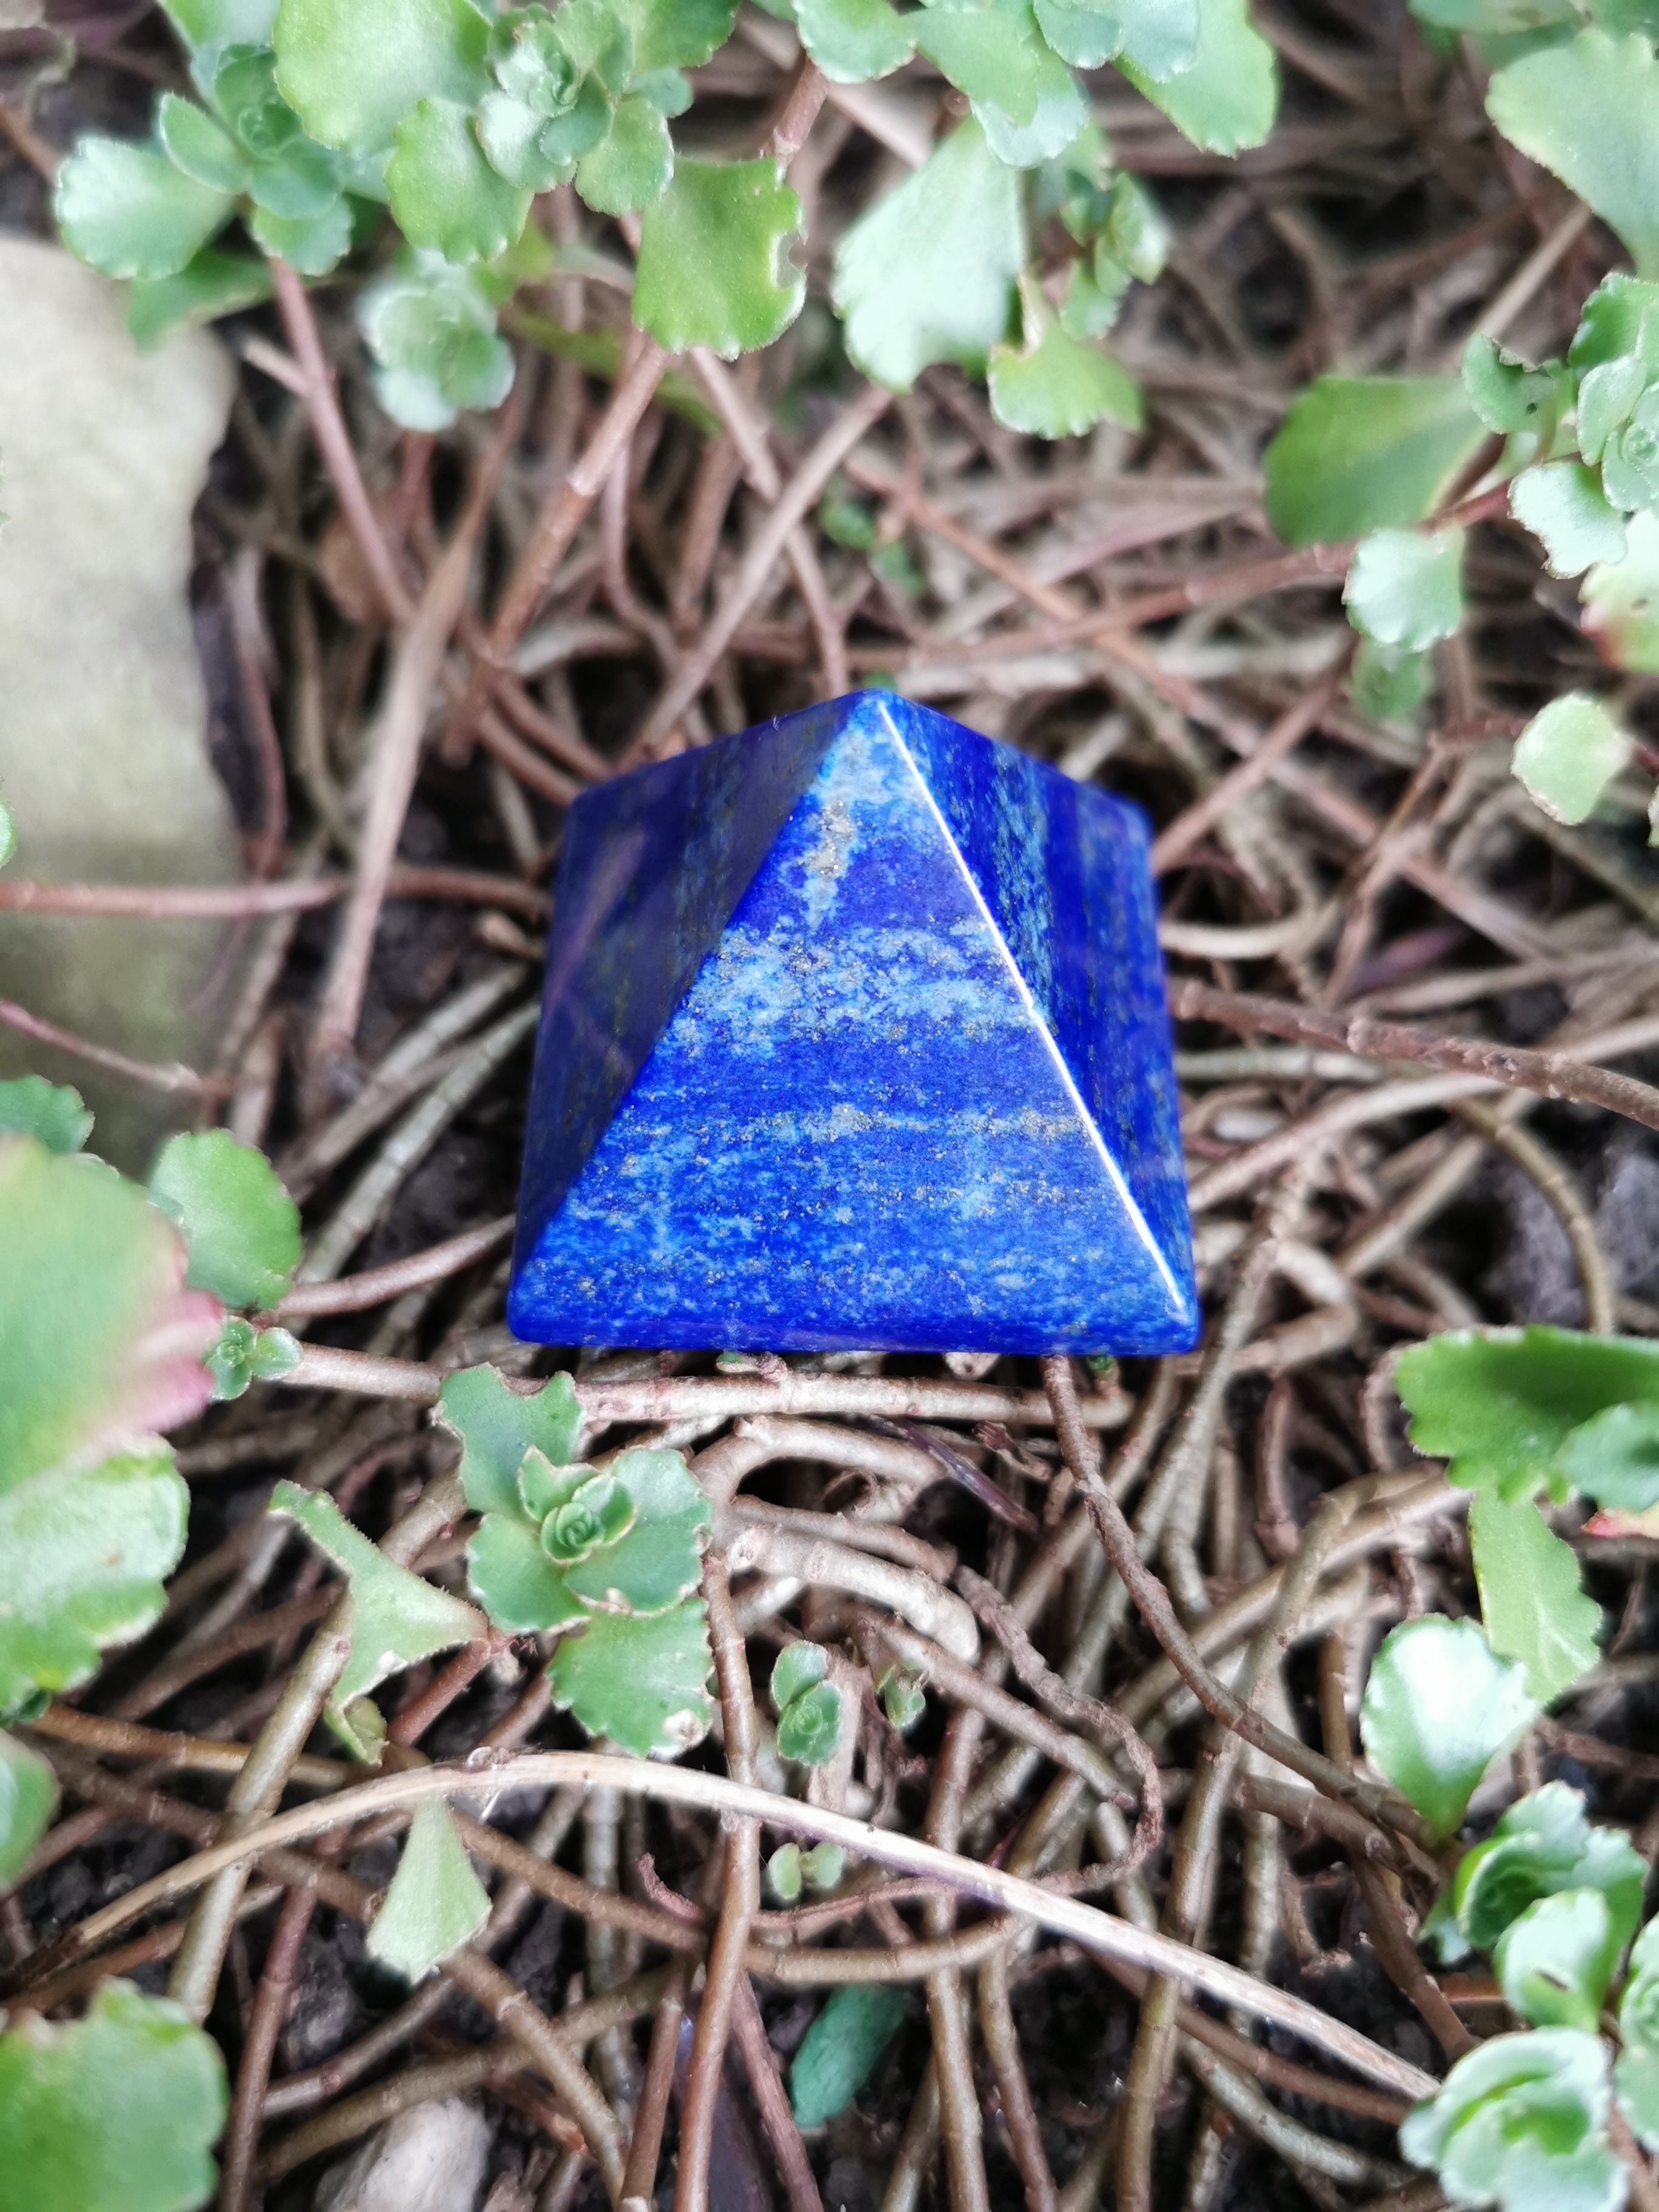 Lapis Lazuli Pyramid - 4cm